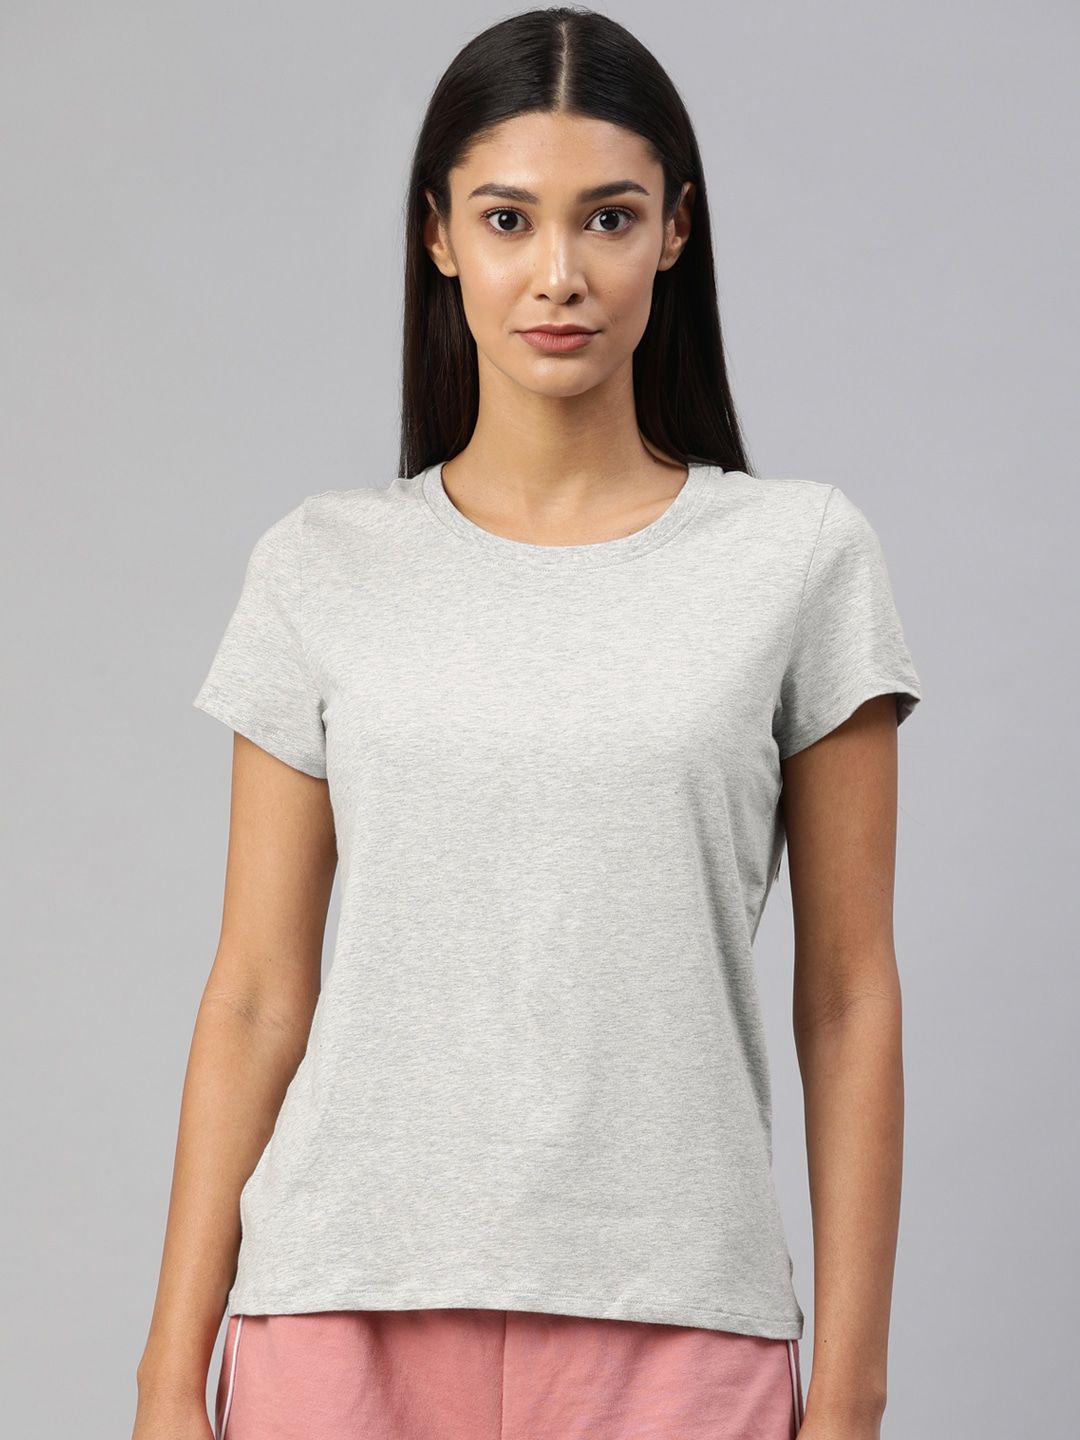 Van Heusen Women Grey Solid Round Neck Lounge T-Shirts Price in India